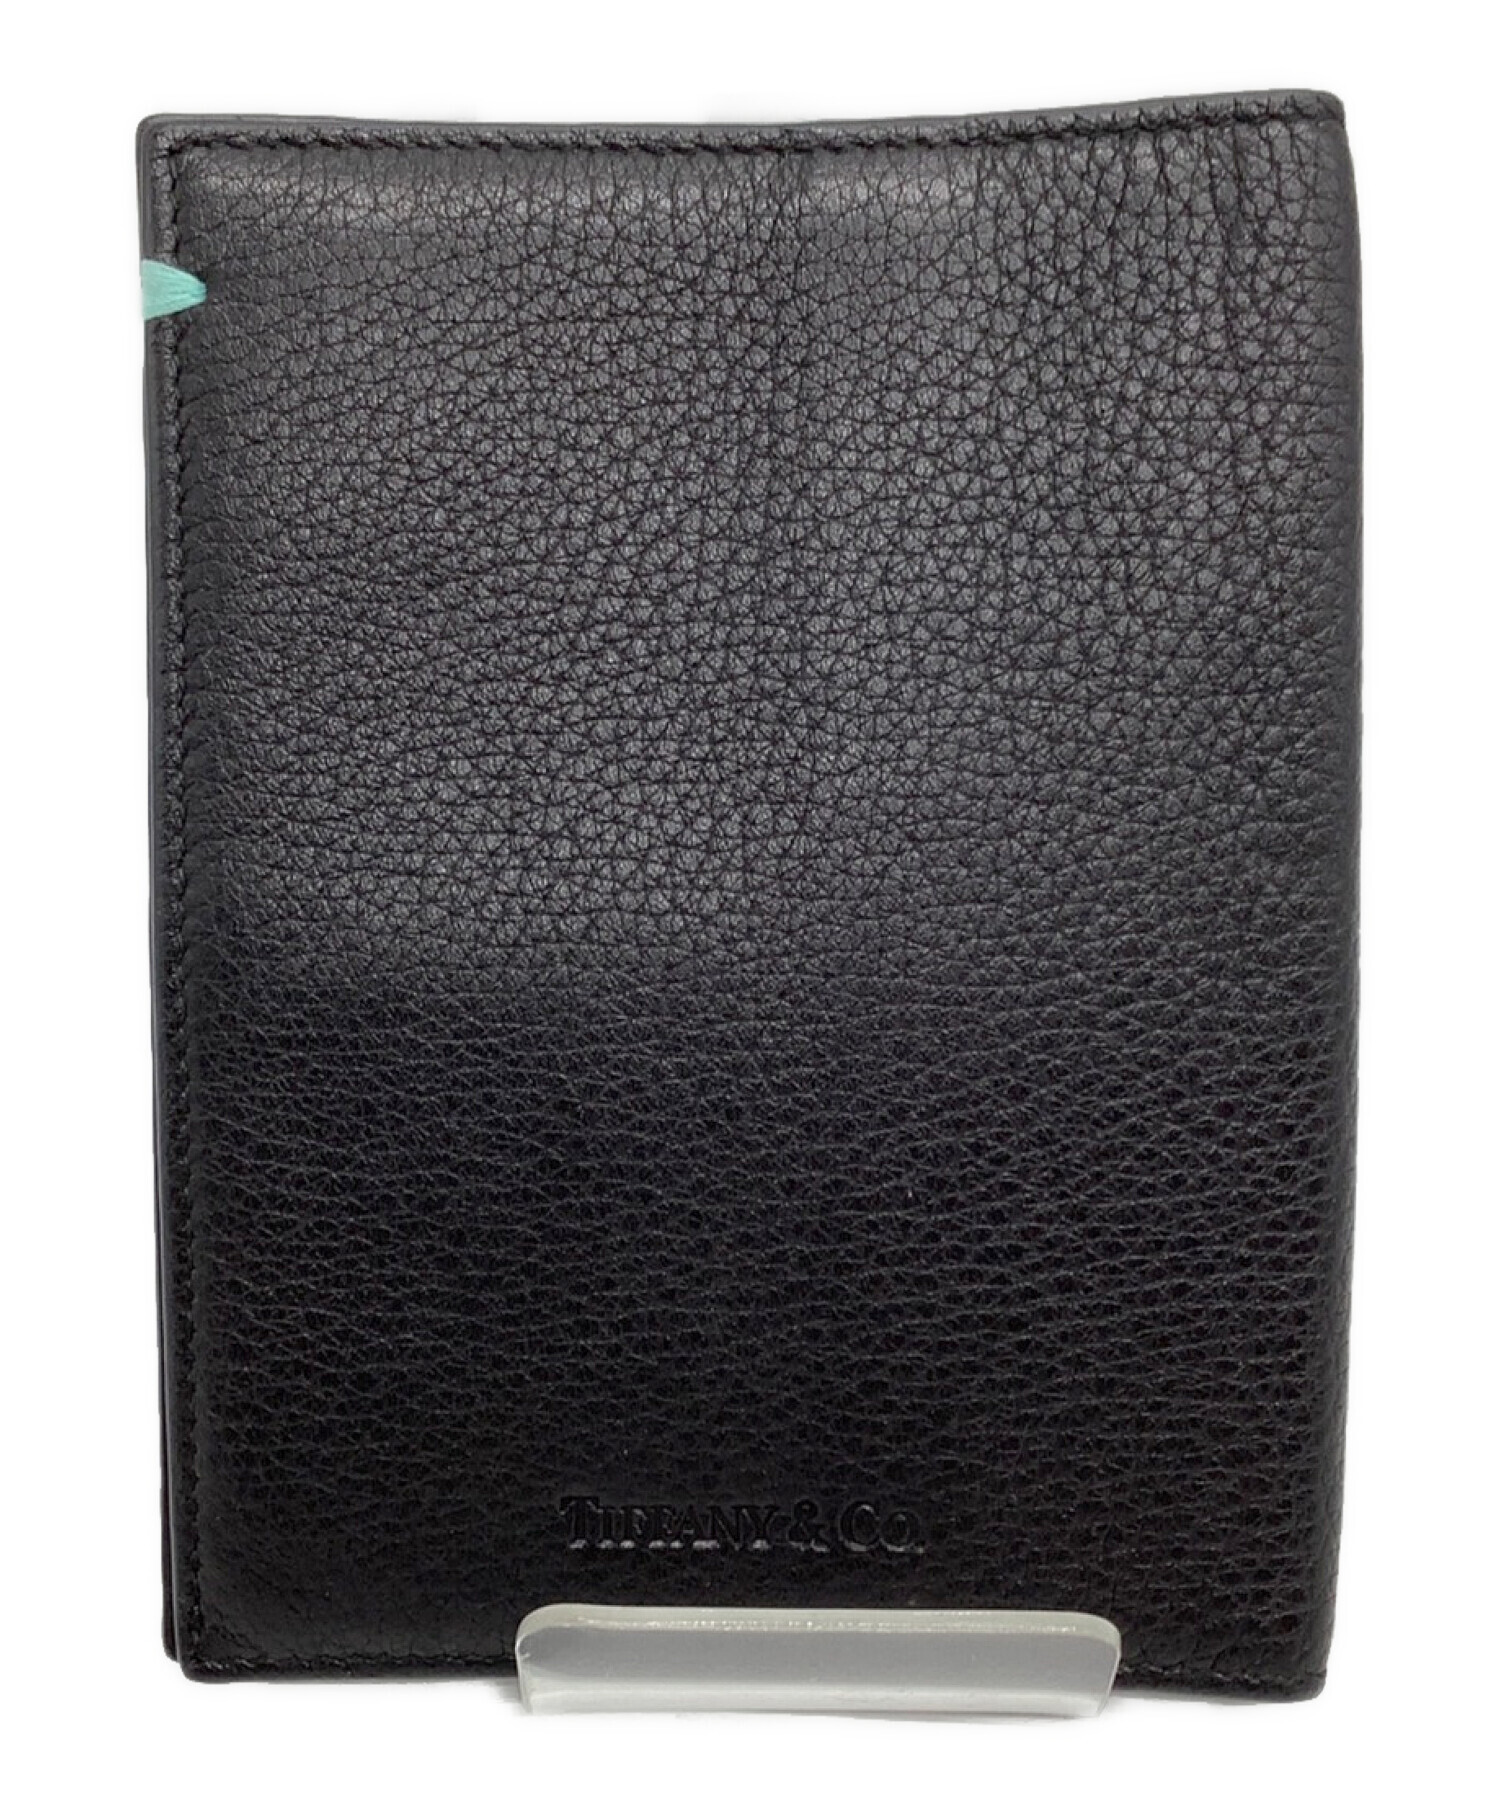 Tiffany & Co. (ティファニー) パスポートケース ブラック